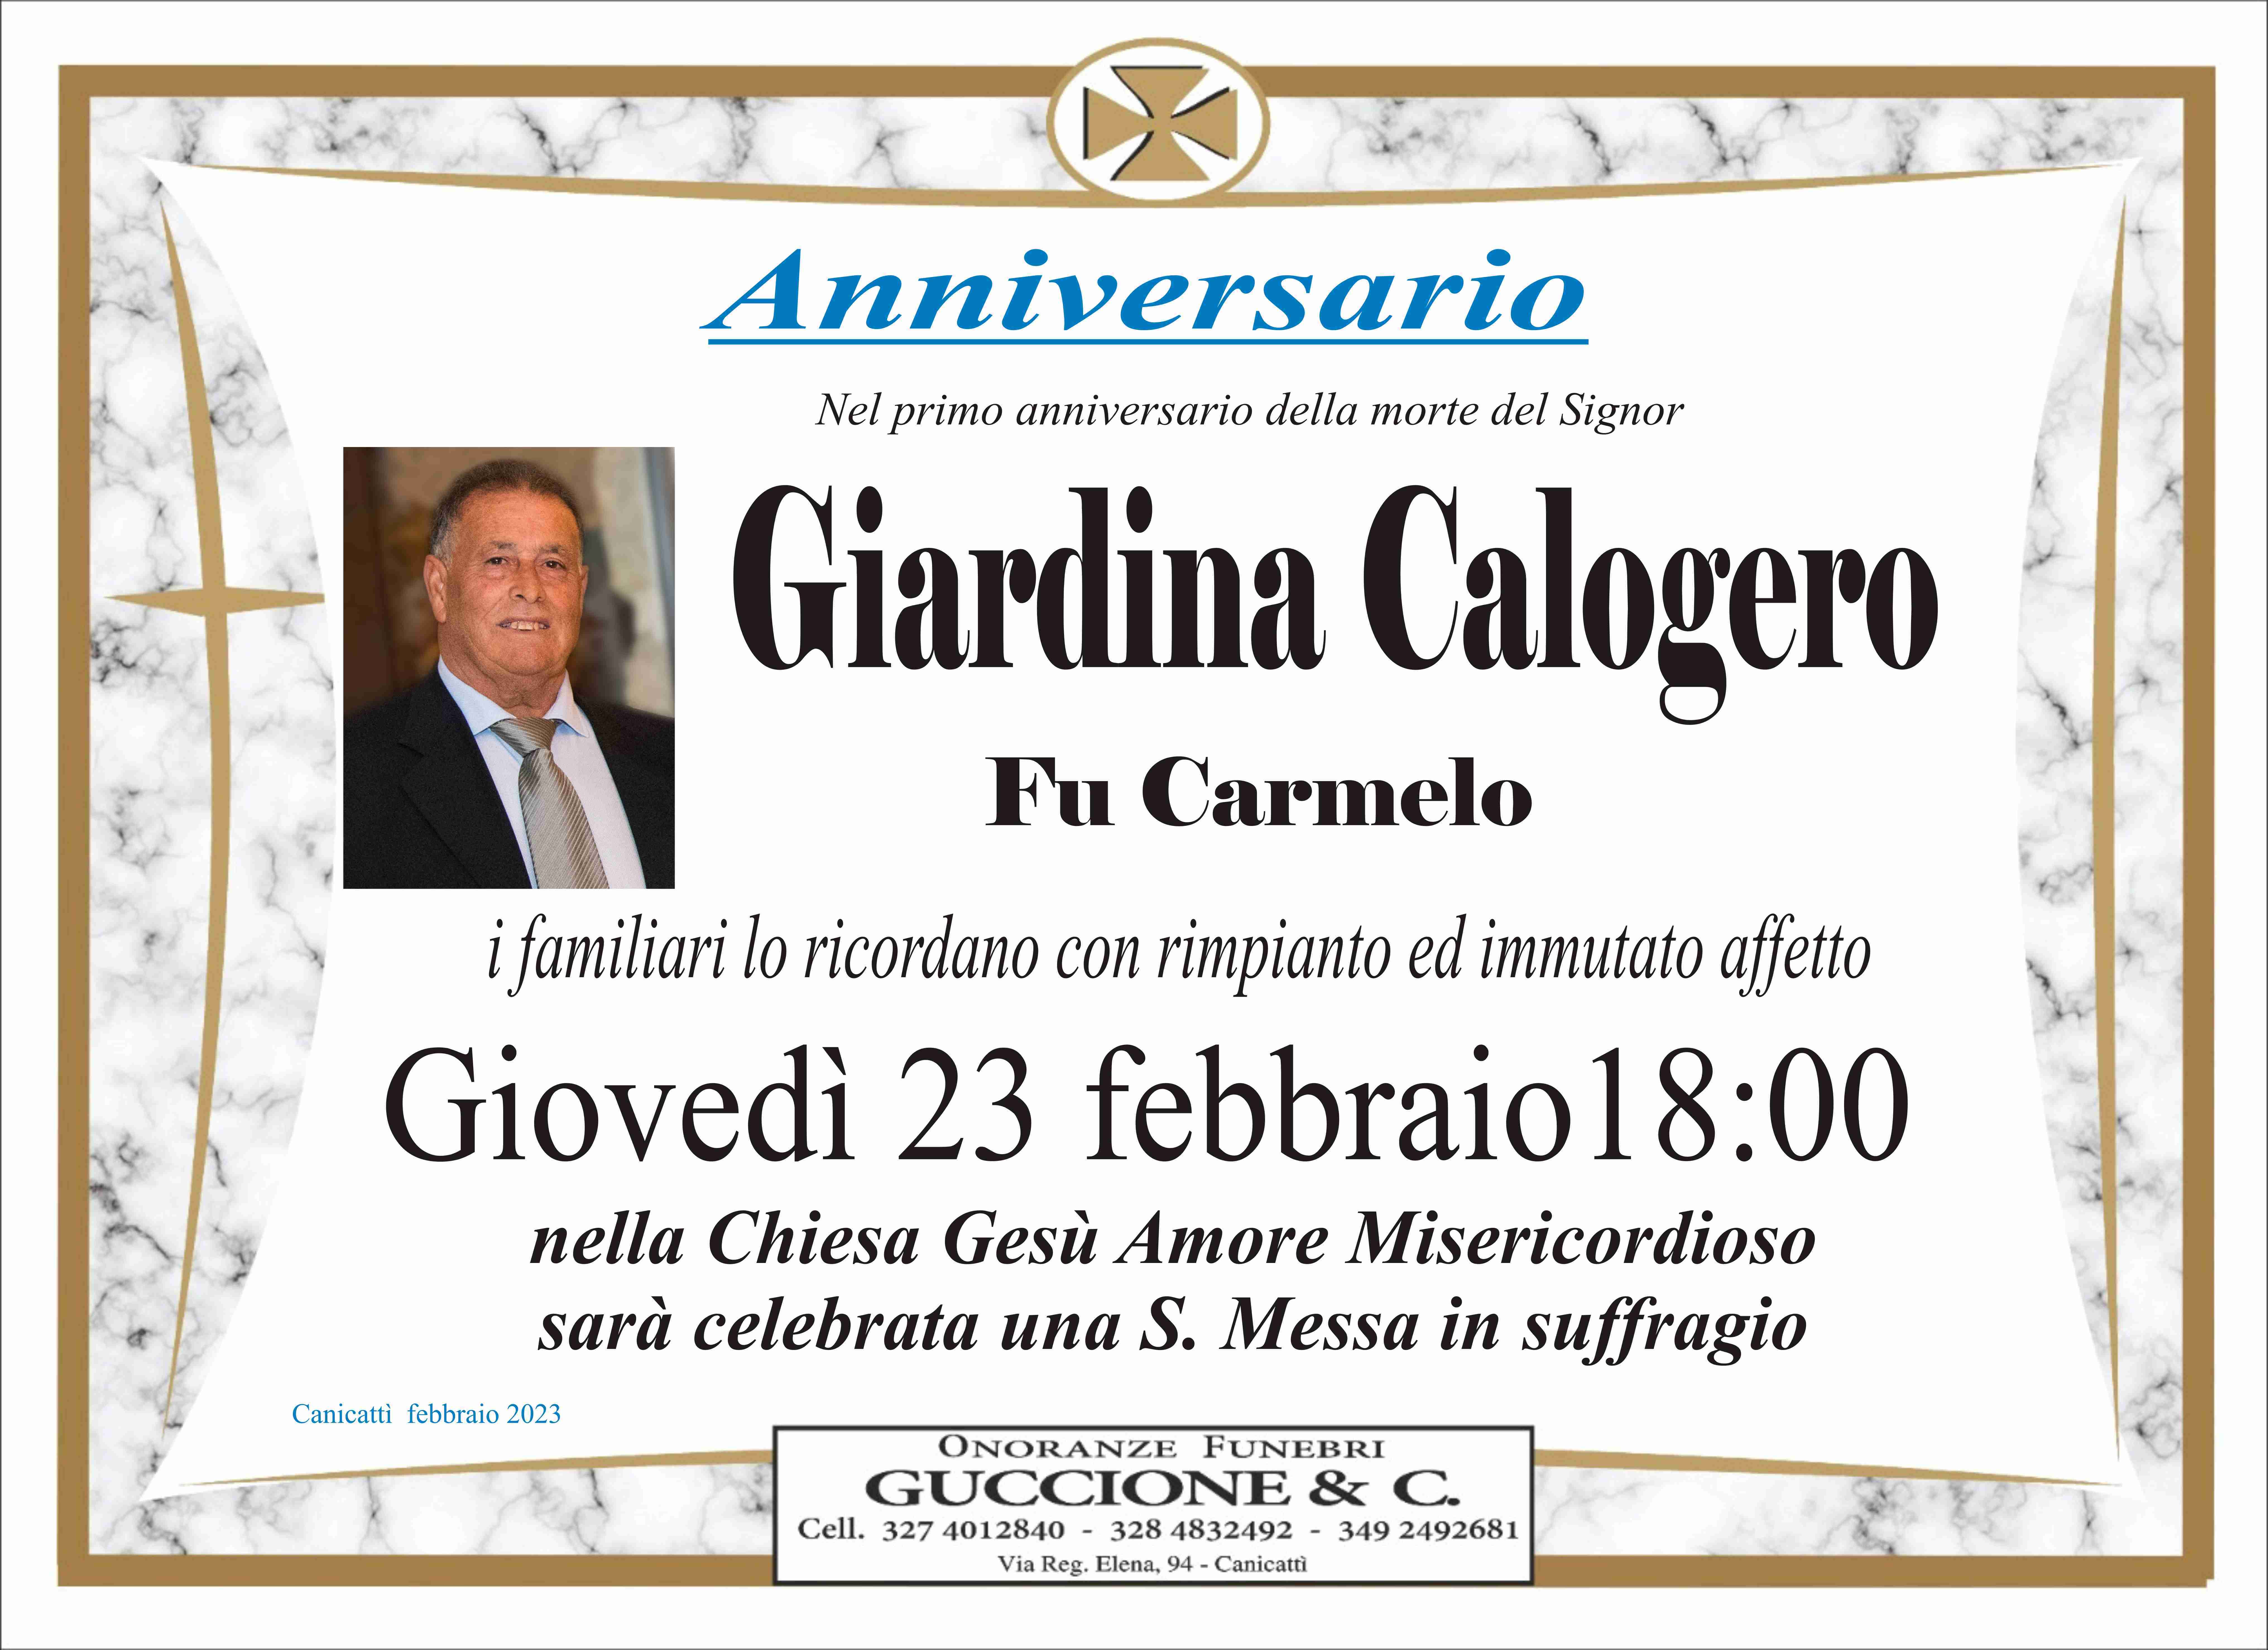 Calogero Giardina